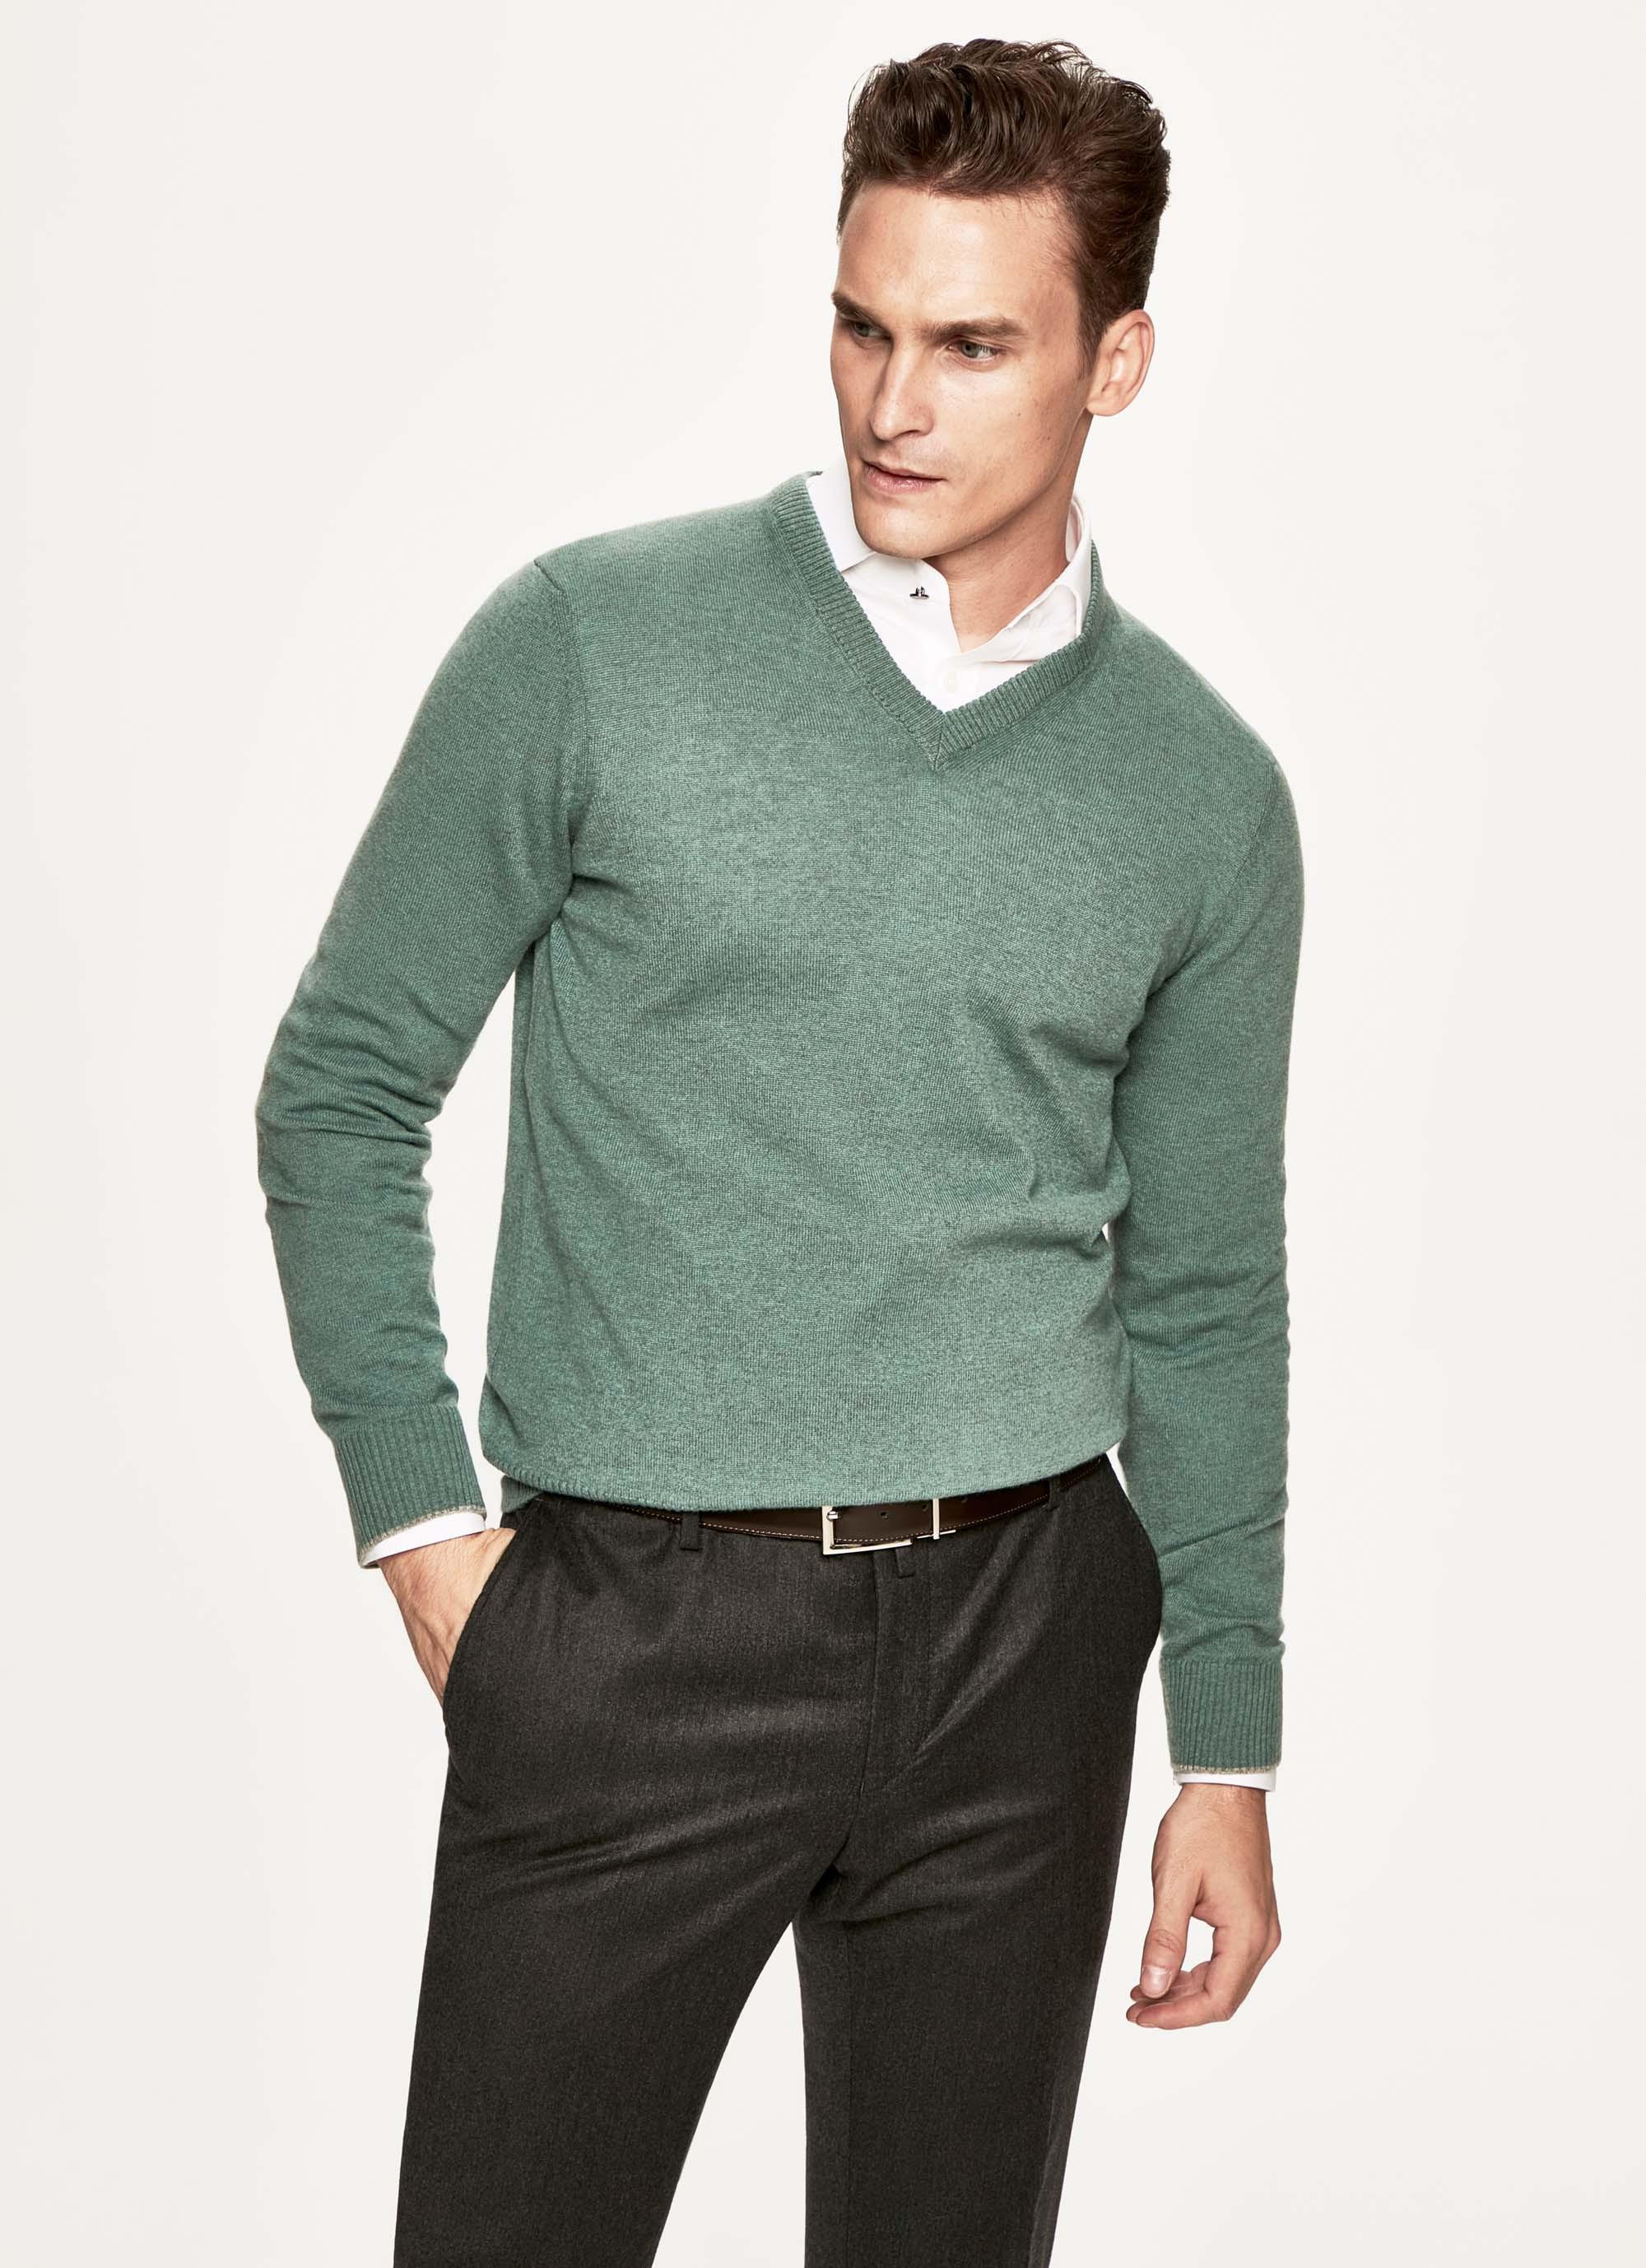 Hackett Cashmere V-neck Sweater in Green for Men - Lyst